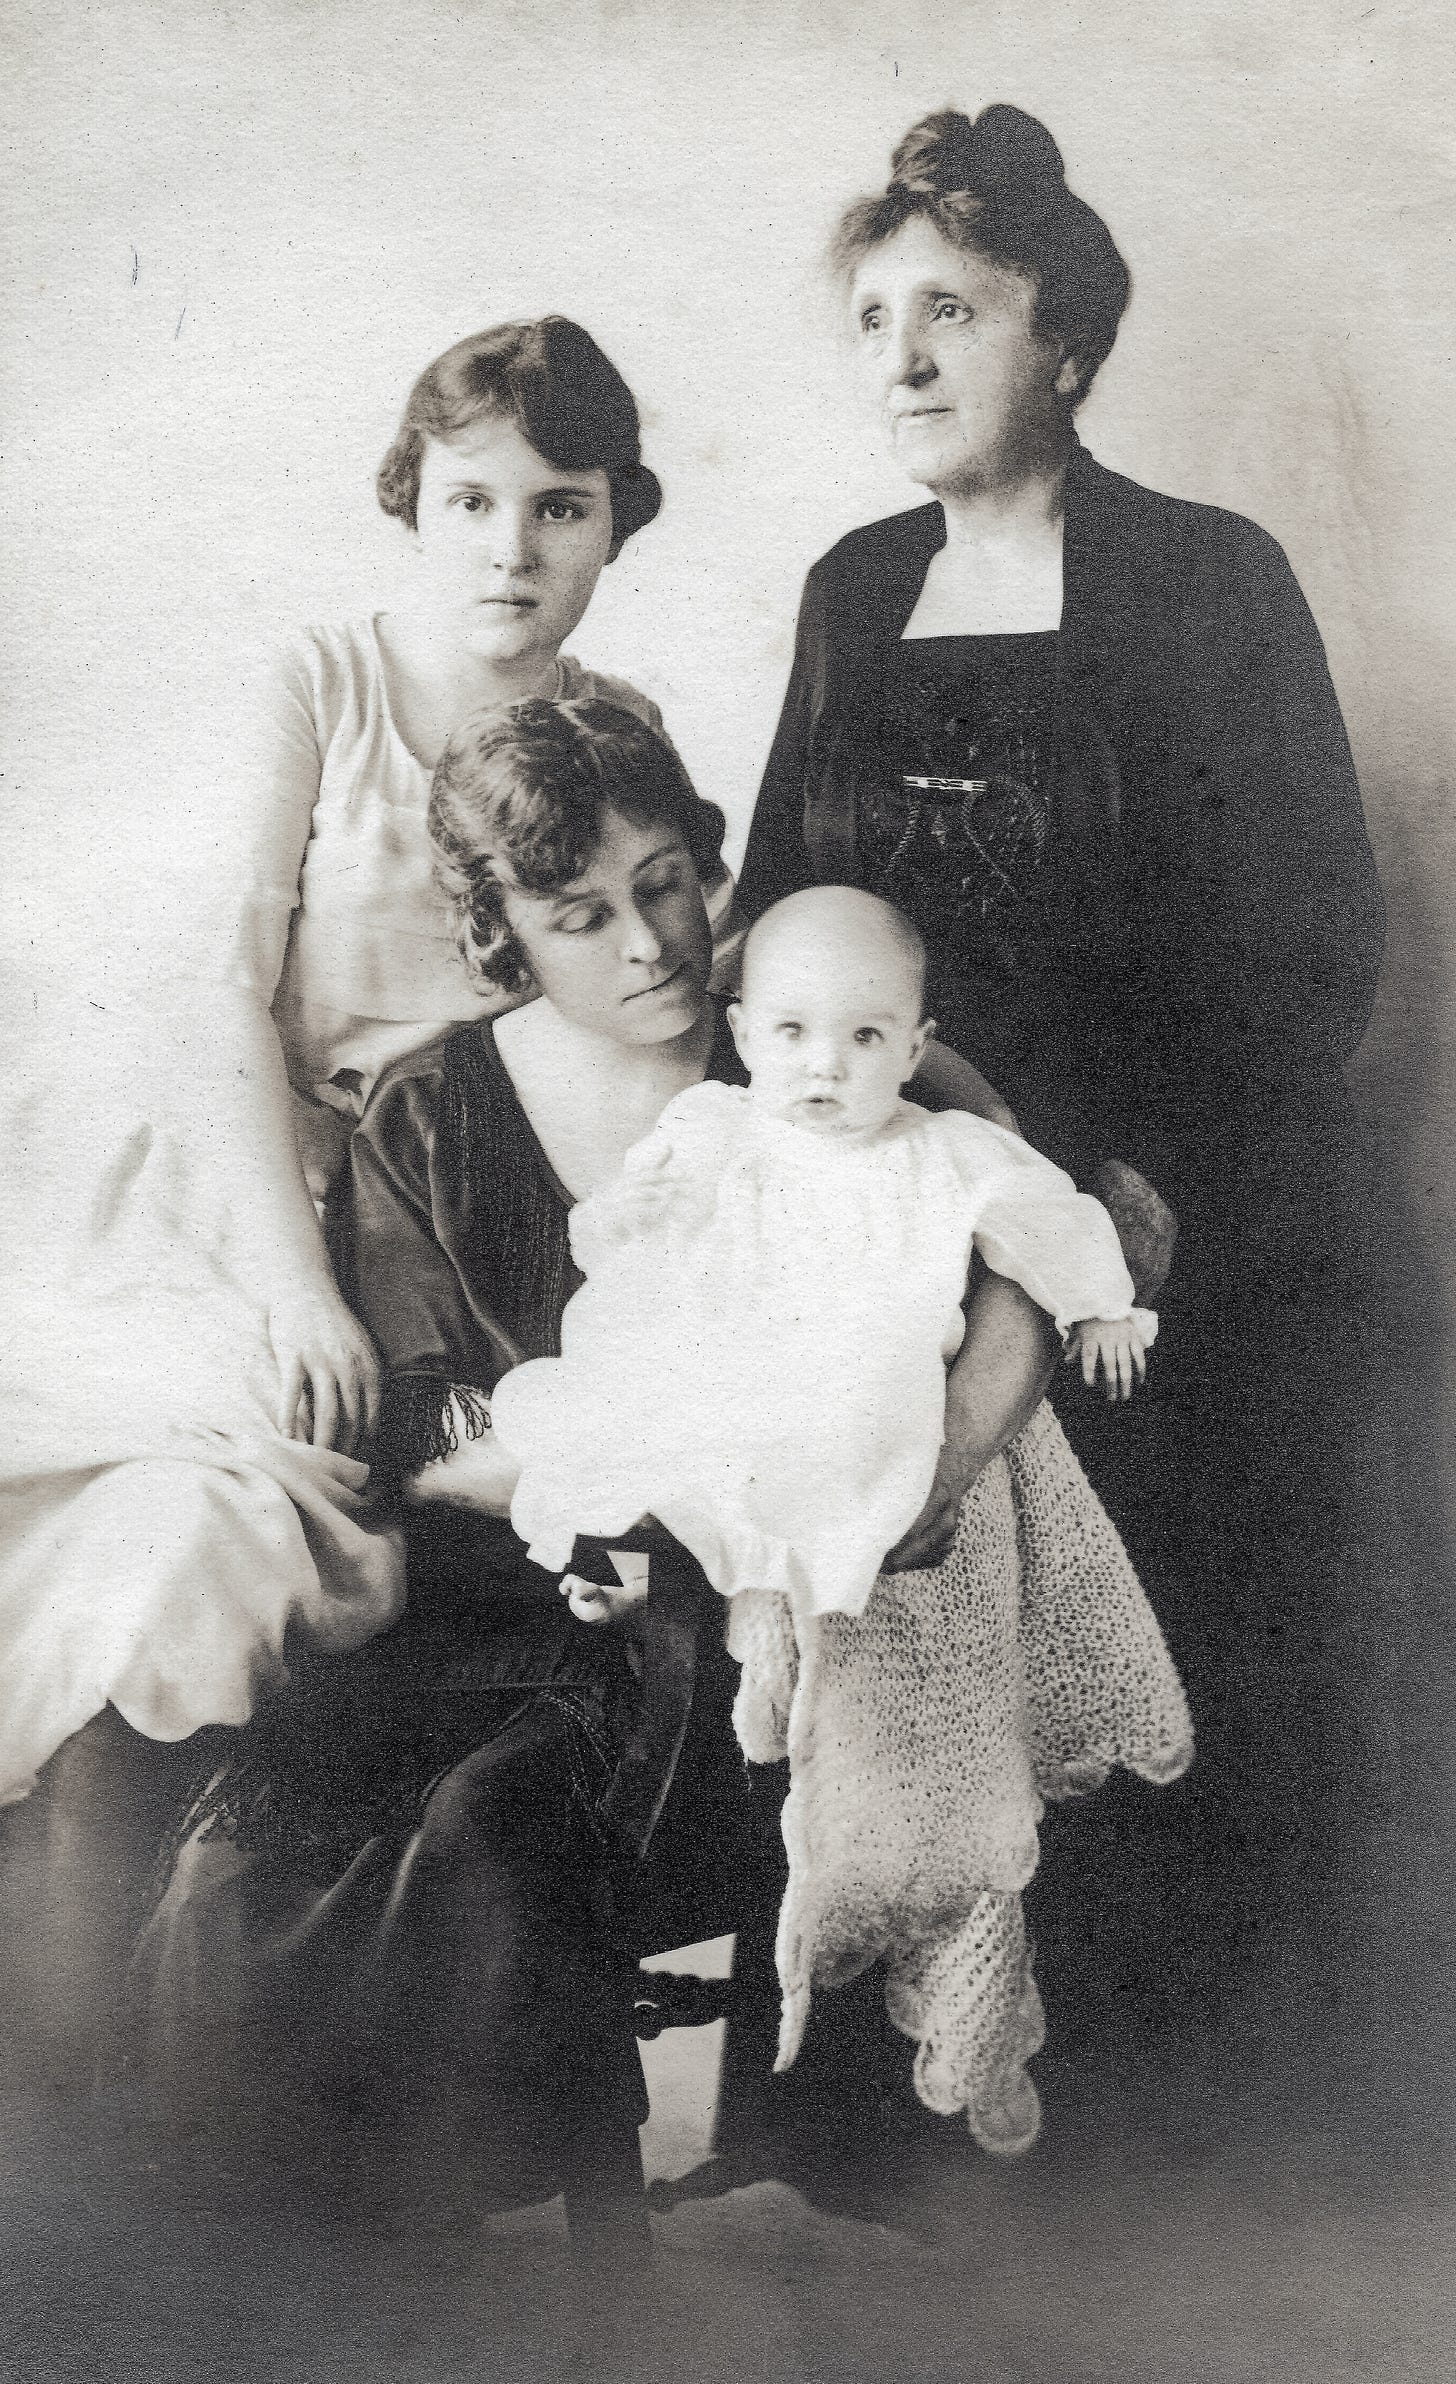 Four generations of women